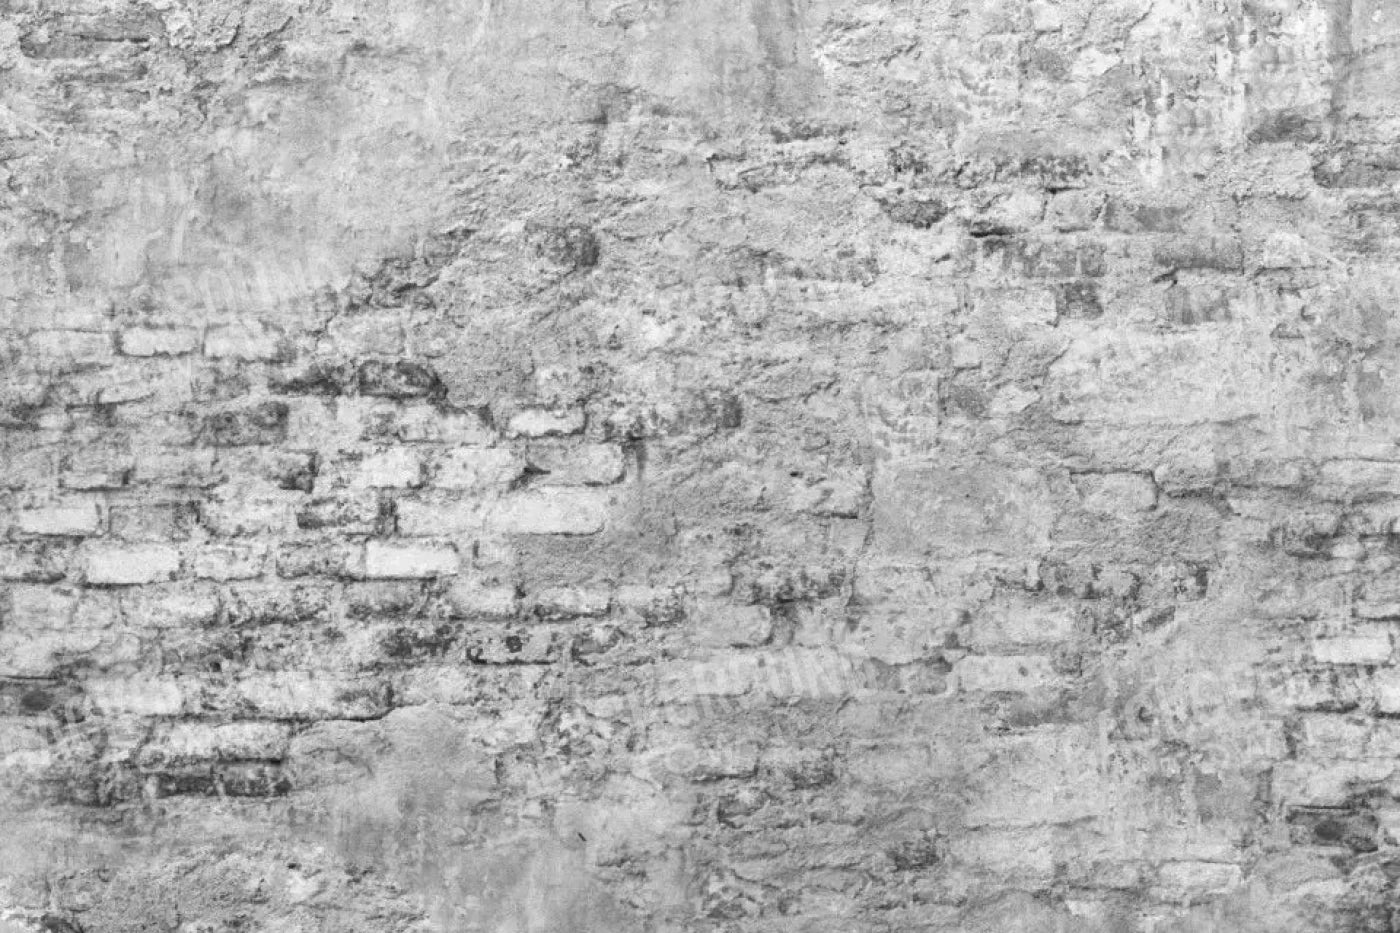 Old Brick Wall 8X5 Ultracloth ( 96 X 60 Inch ) Backdrop